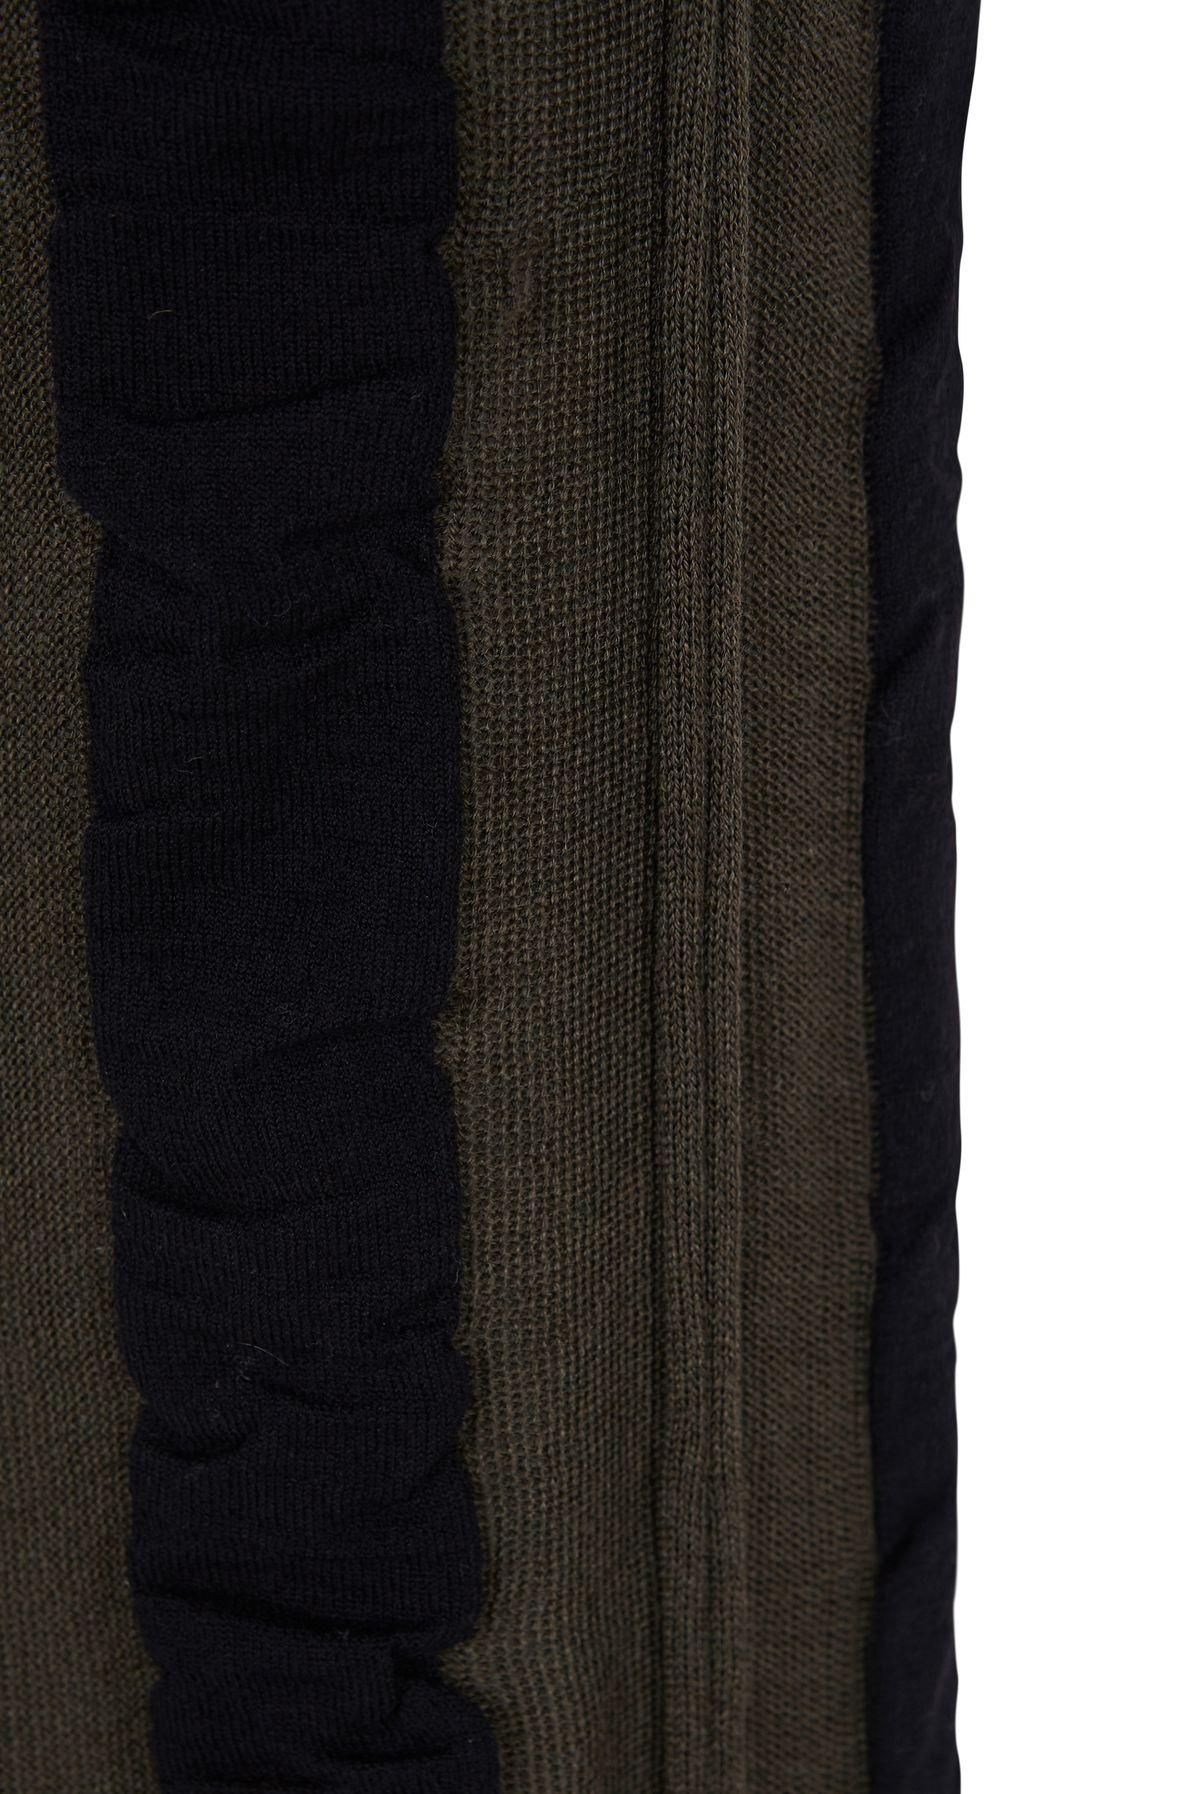 Cortana Winona knit skirt